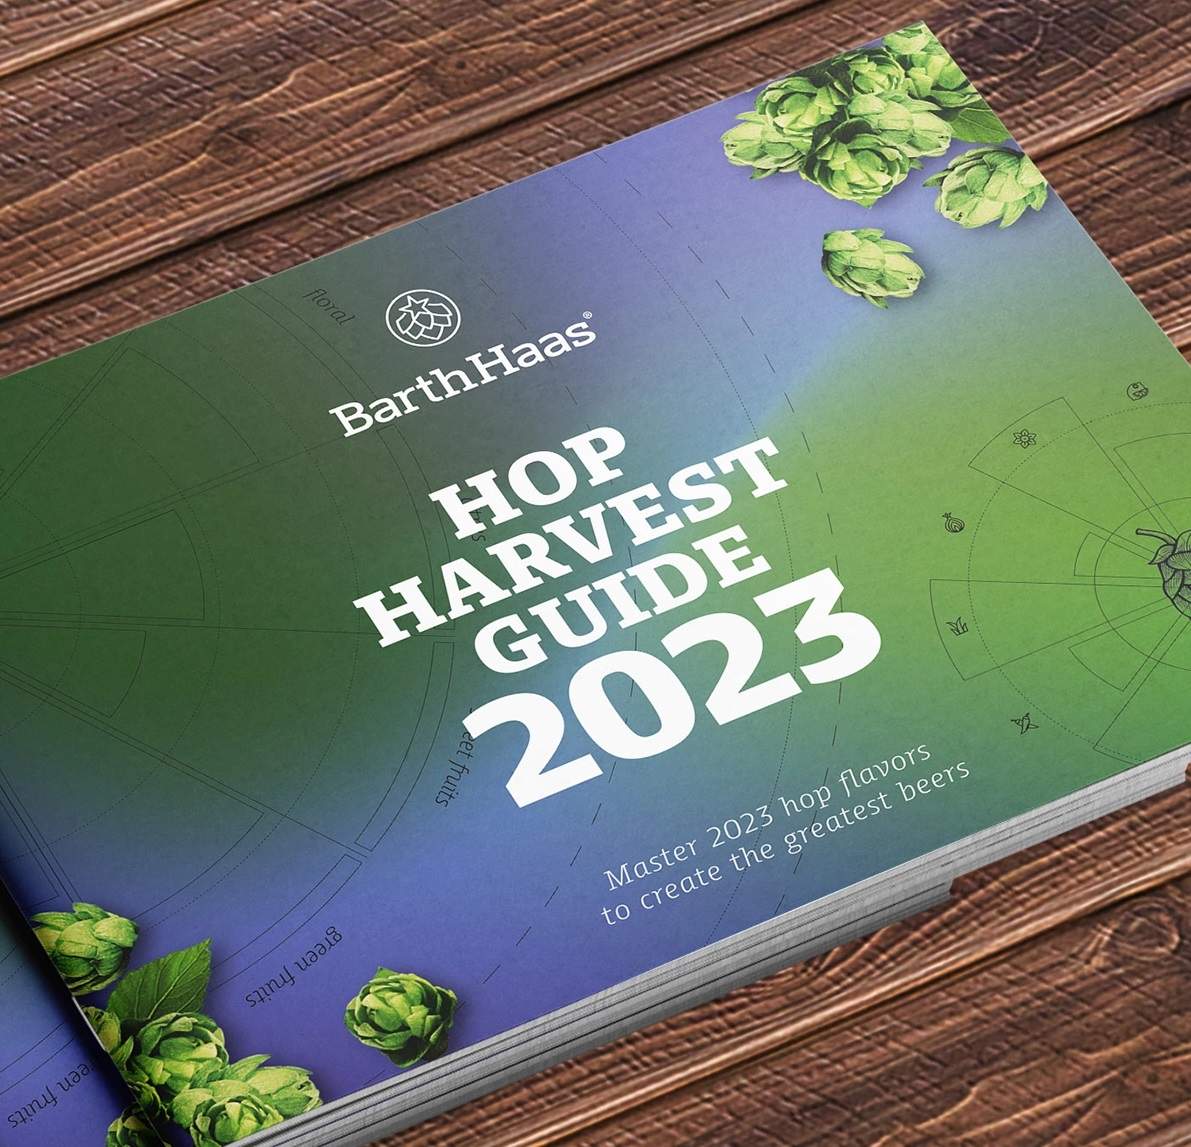 BarthHass hop harvest guide 2023